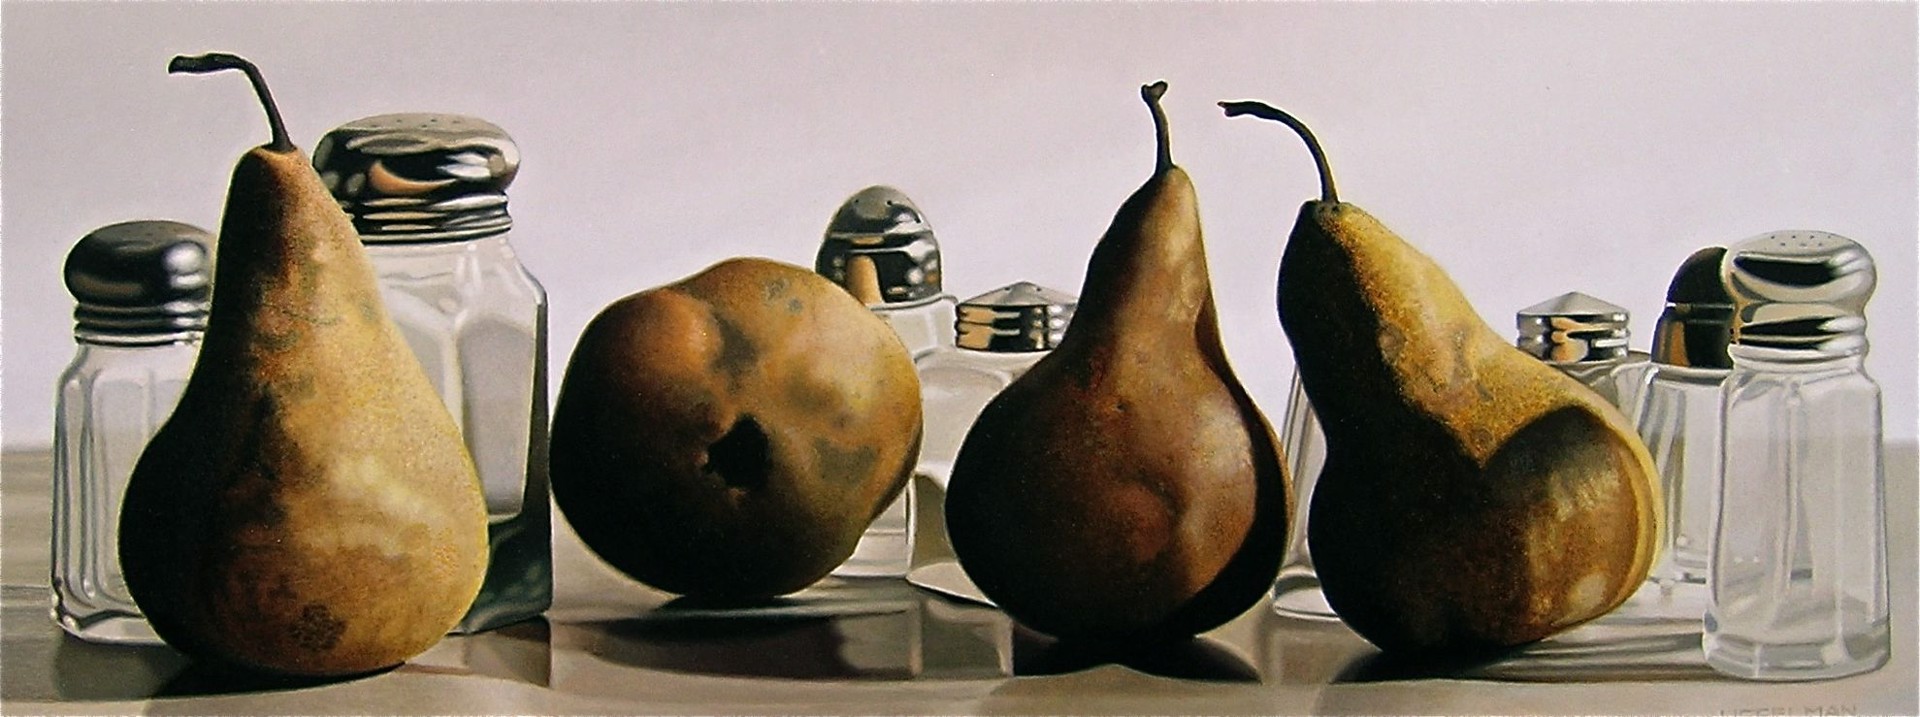 Shaker and Pears by Jeff Uffelman